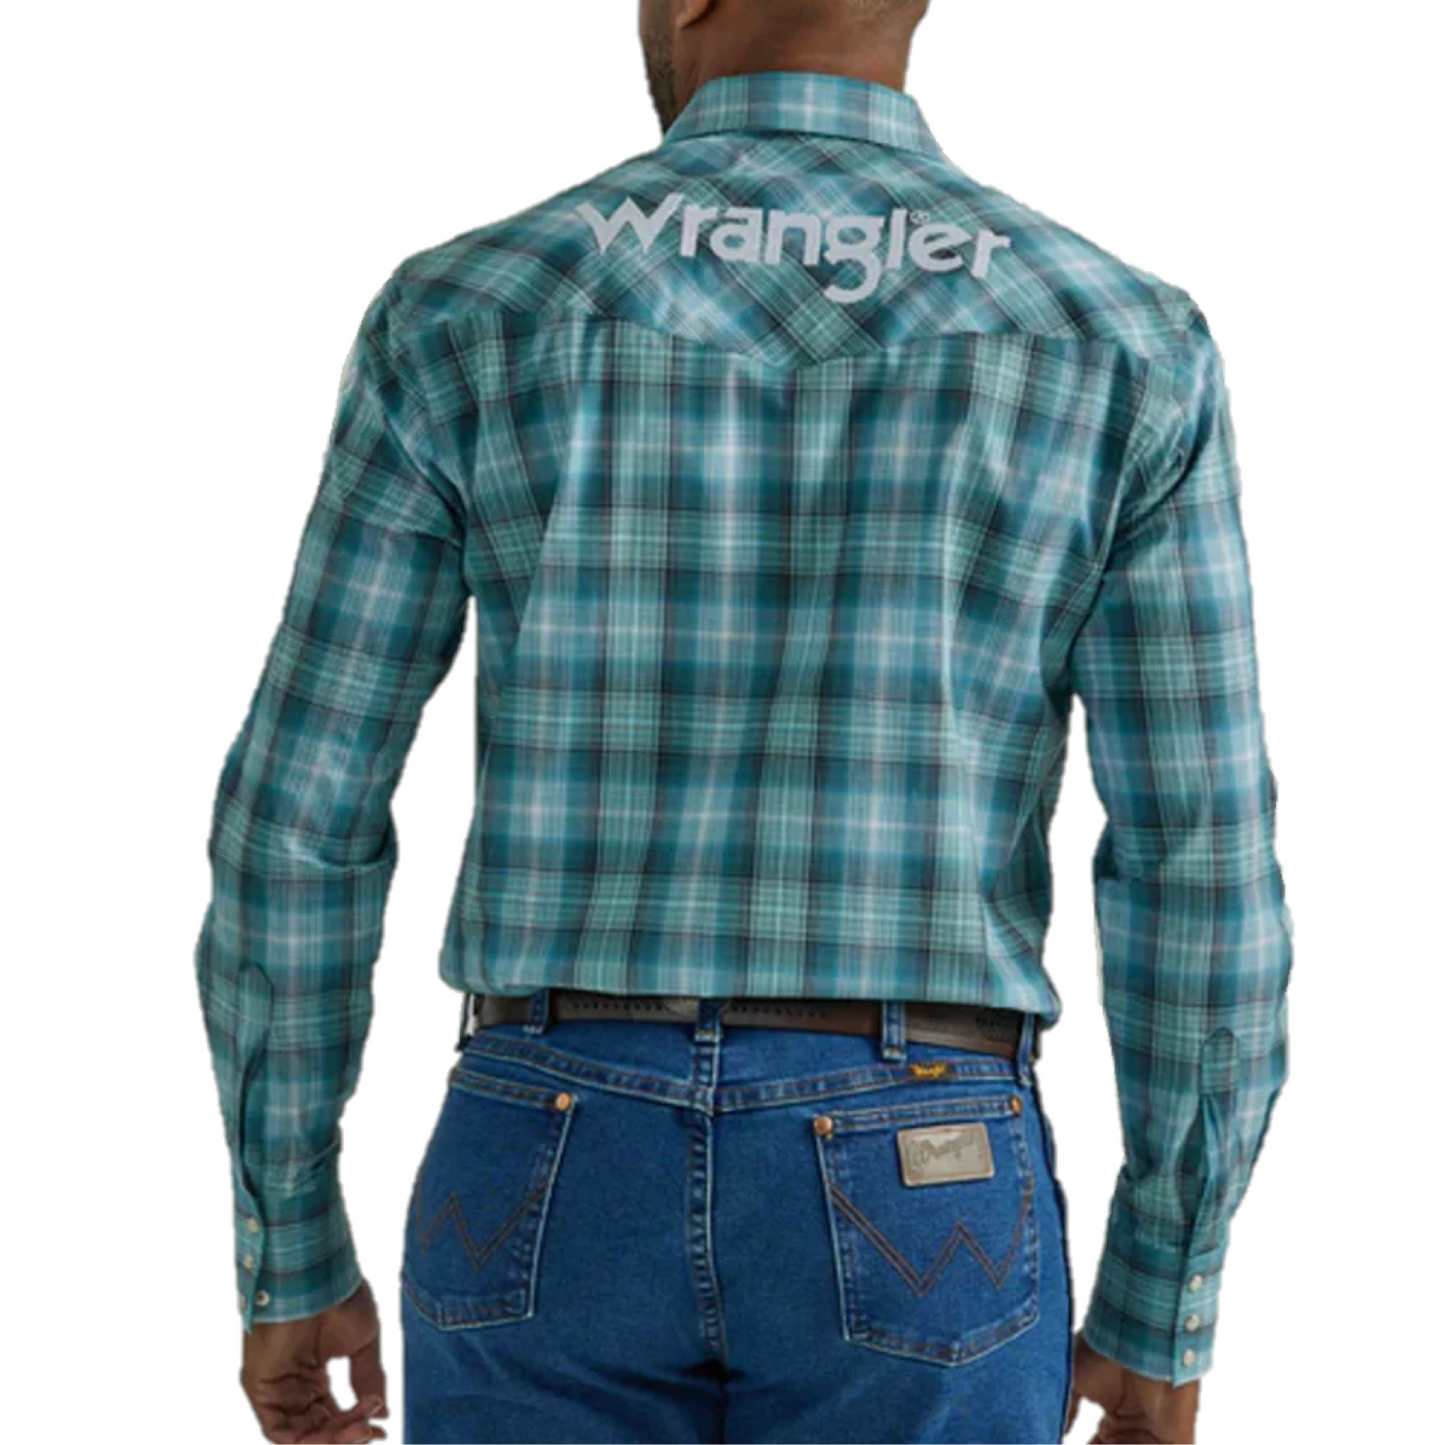 Wrangler® Men's Light Blue Plaid Logo Button Down Shirt 2330339